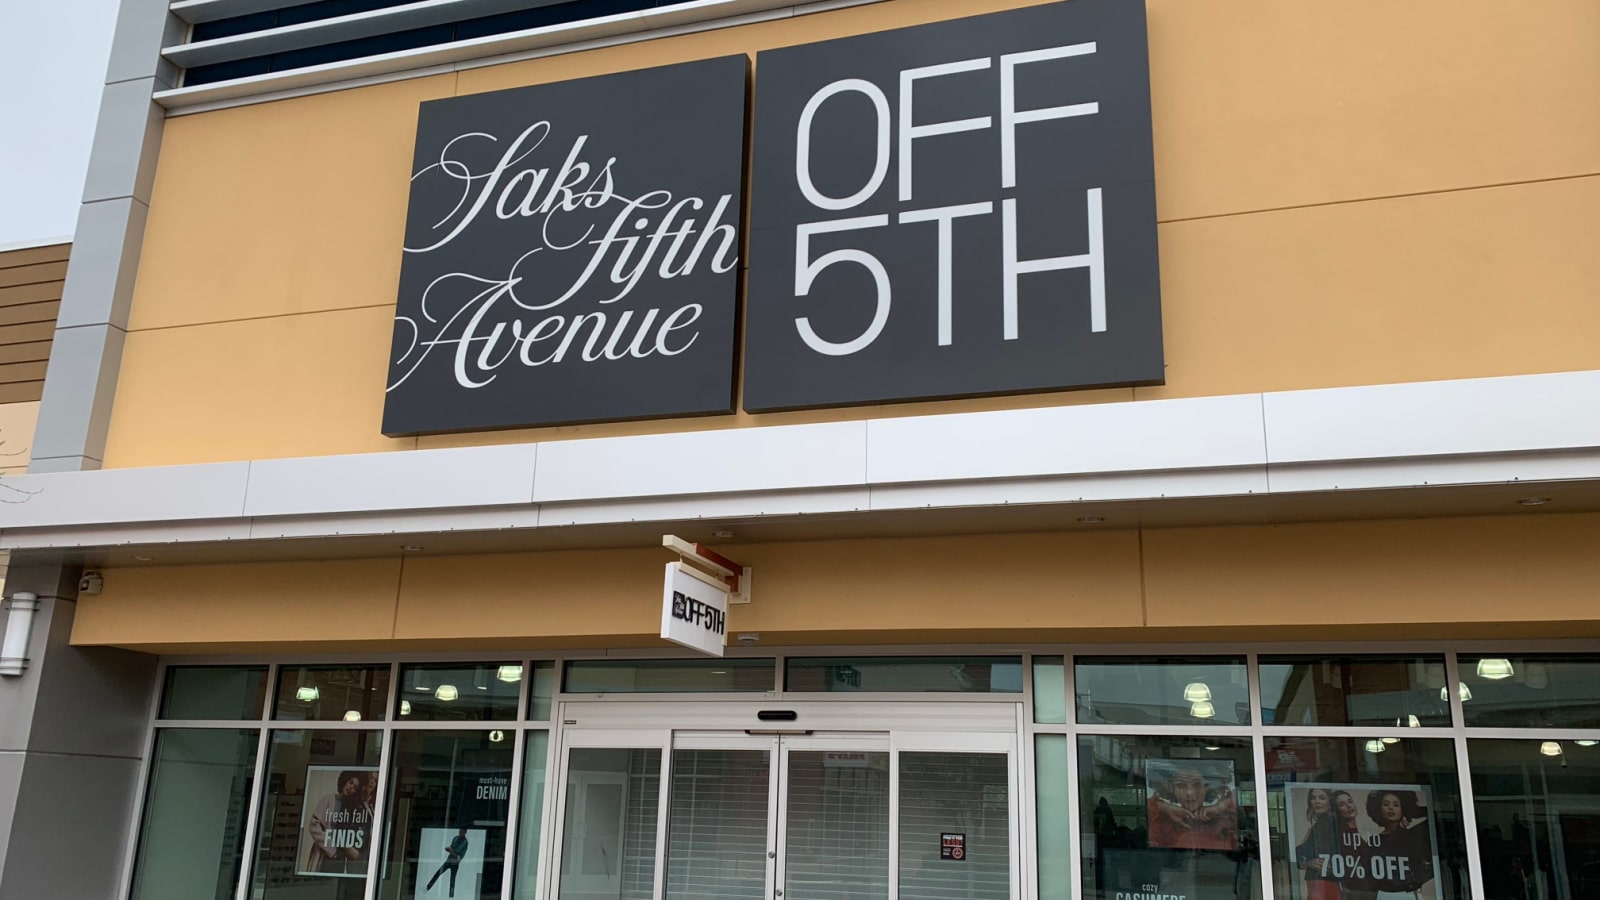 Glendale, Arizona, October 14, 2018: Saks Fifth Avenue Off 5th Store